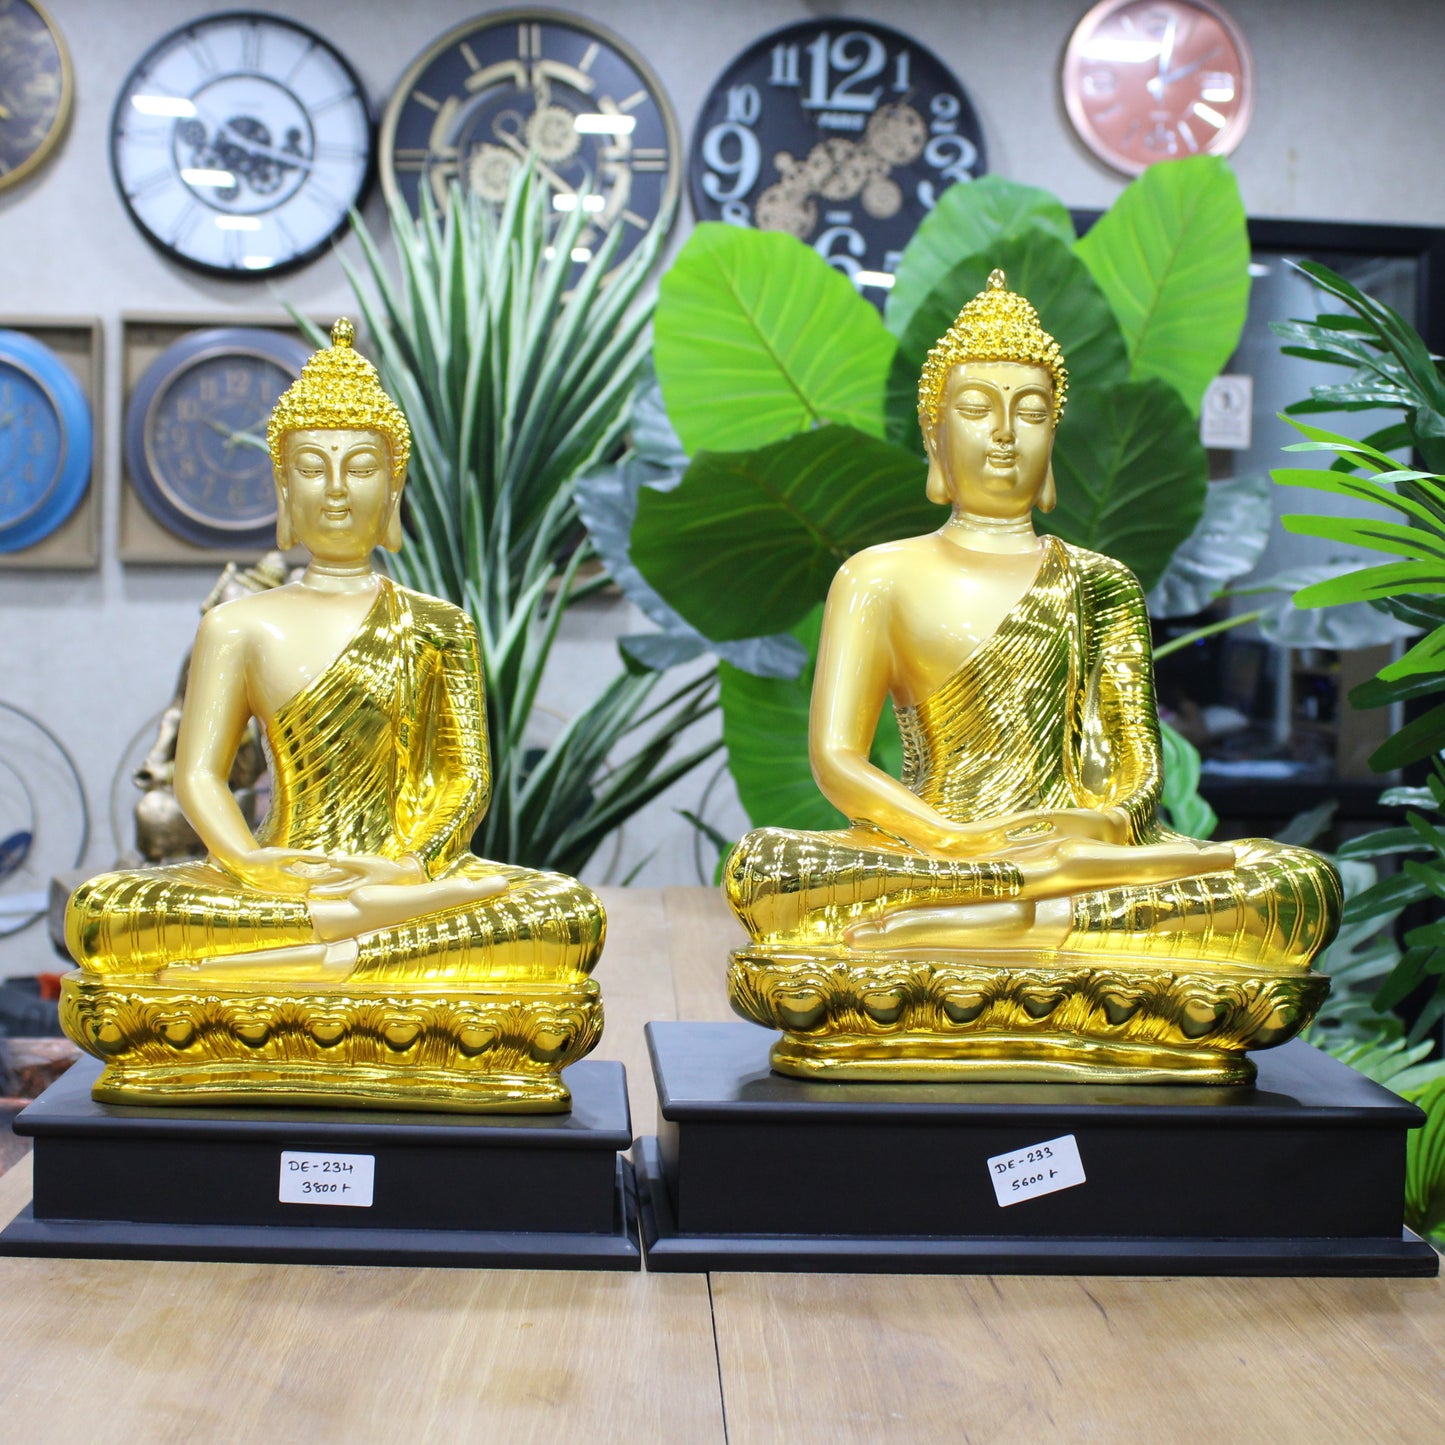 Euroxo Golden Buddha Idol in Dhyan Mudra